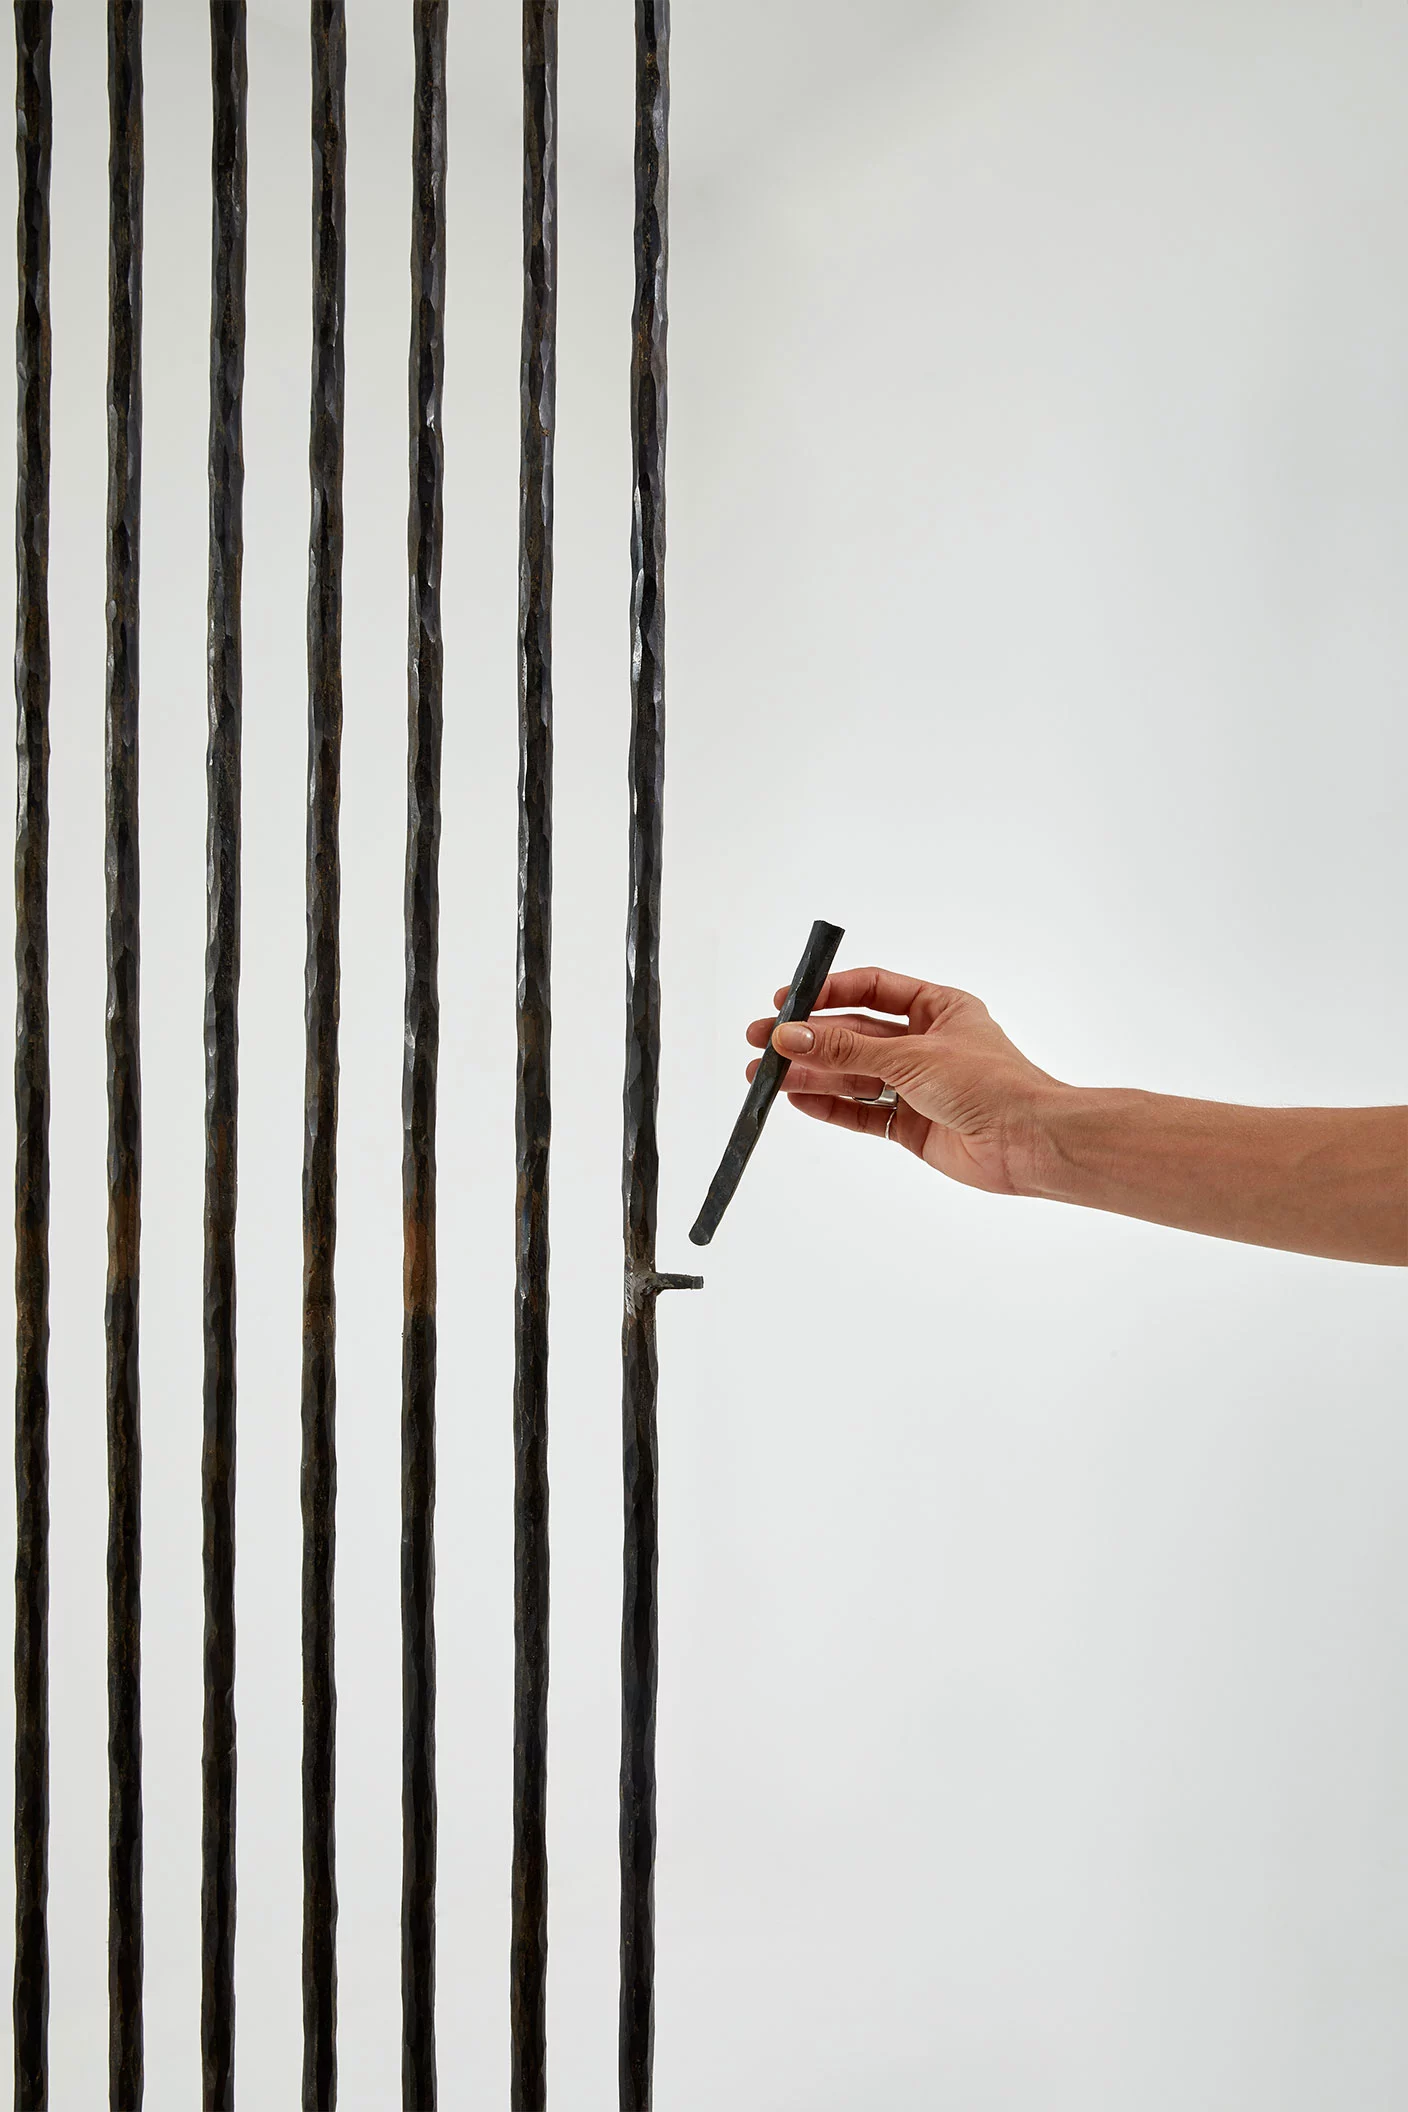 Cage haute - Elisabeth Garouste & Mattia Bonetti - Storage - Galerie kreo